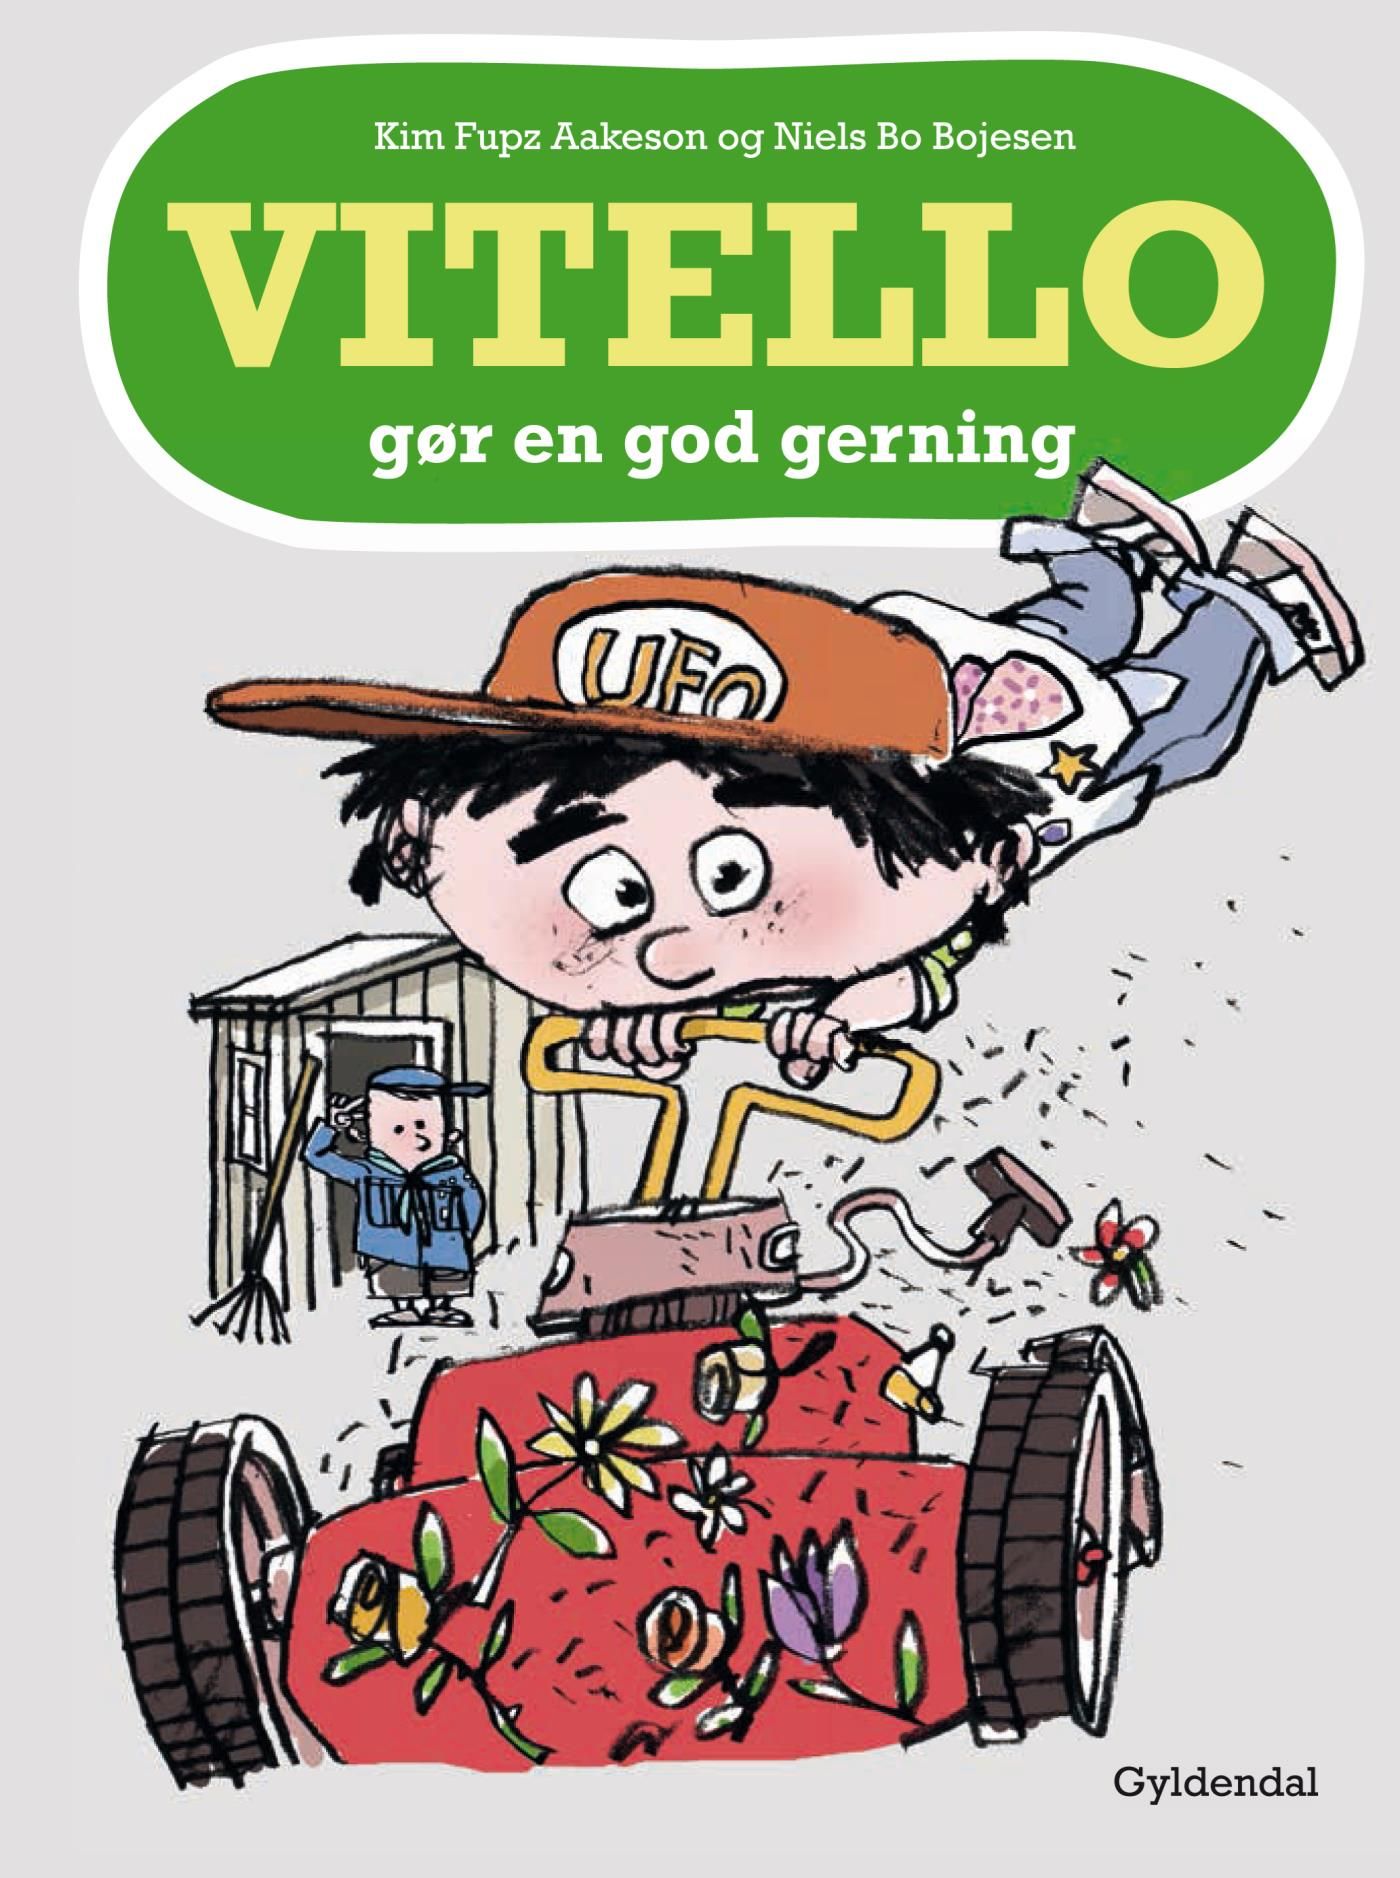 Vitello gør en god gerning - Lyt&læs, eBook by Niels Bo Bojesen, Kim Fupz Aakeson